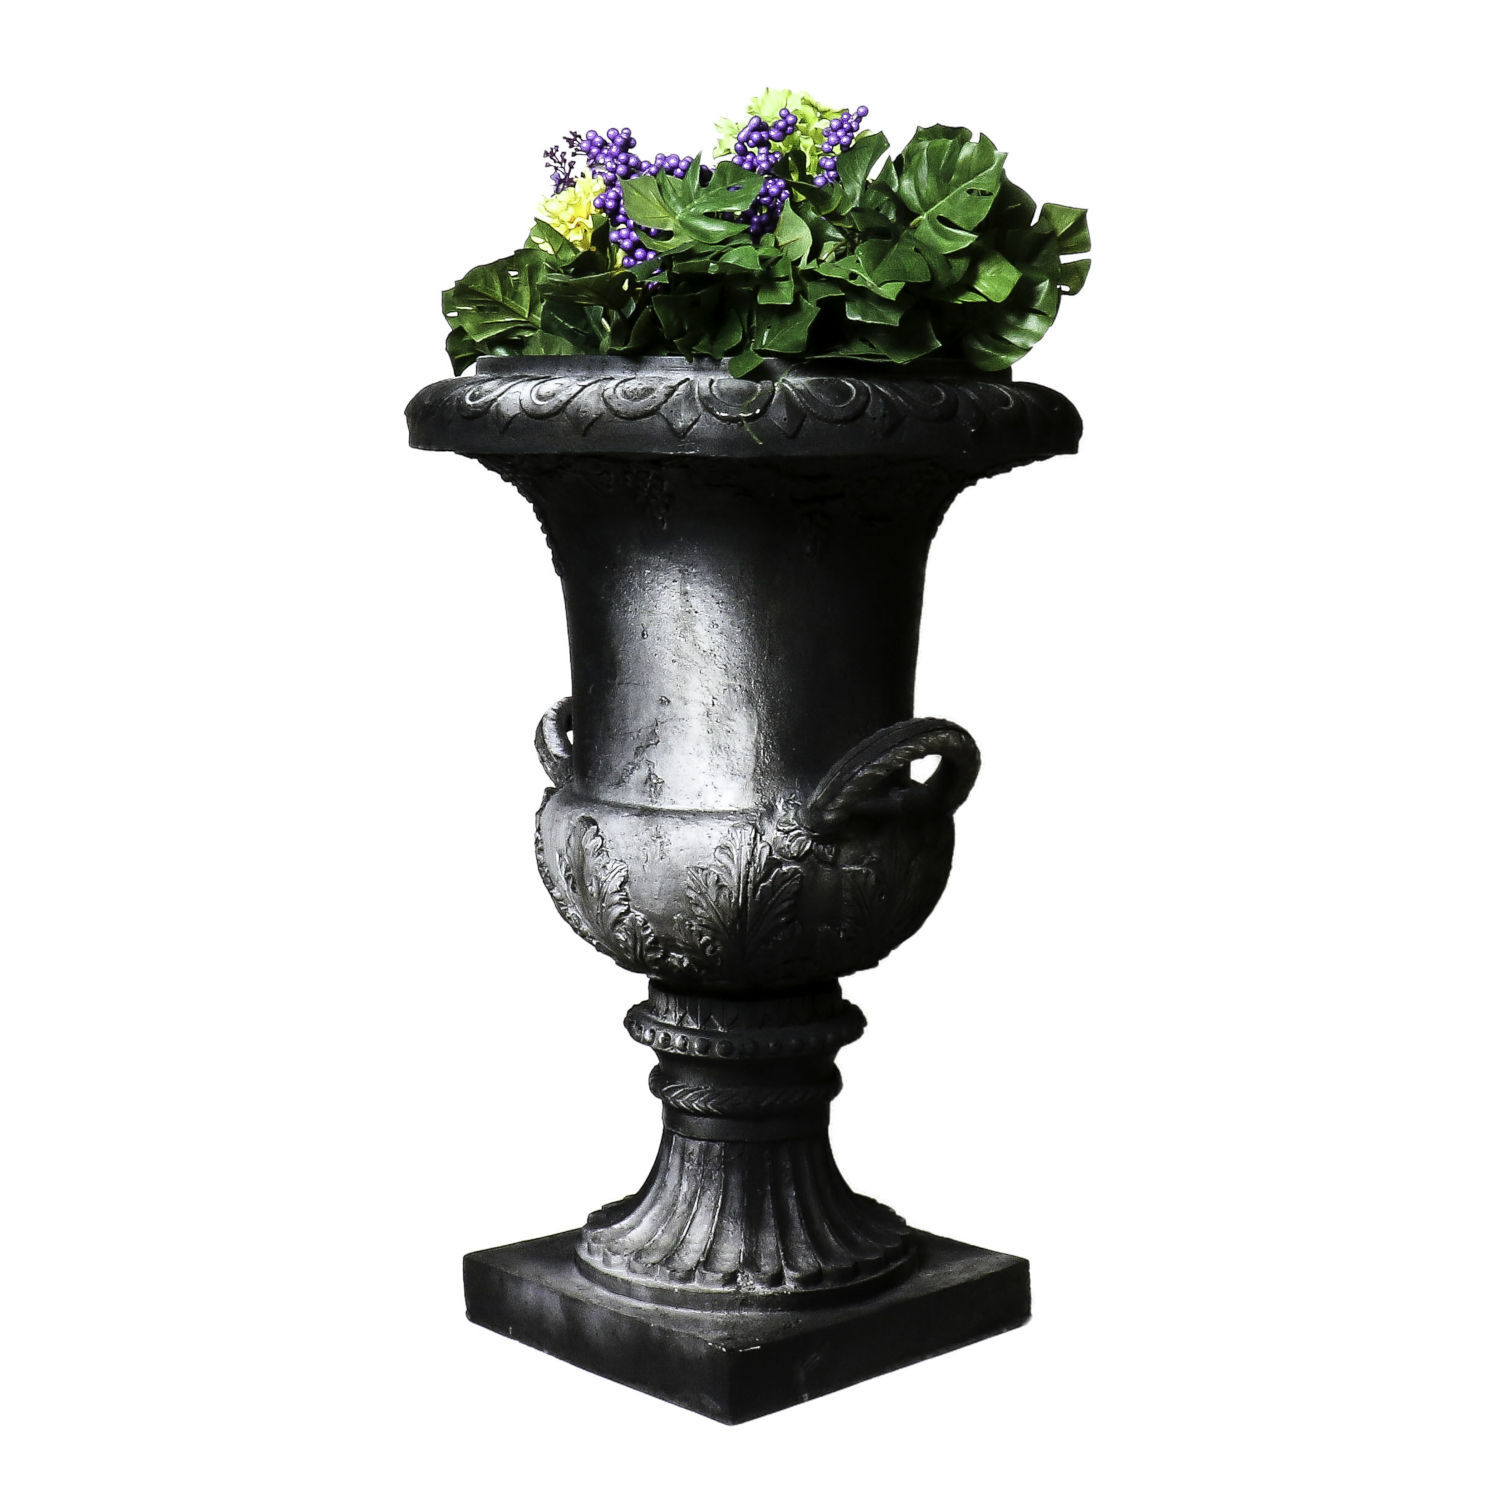 Cherub Garden Planter Pot by Orlandi Statuary Made of Fiberstone-FS034 